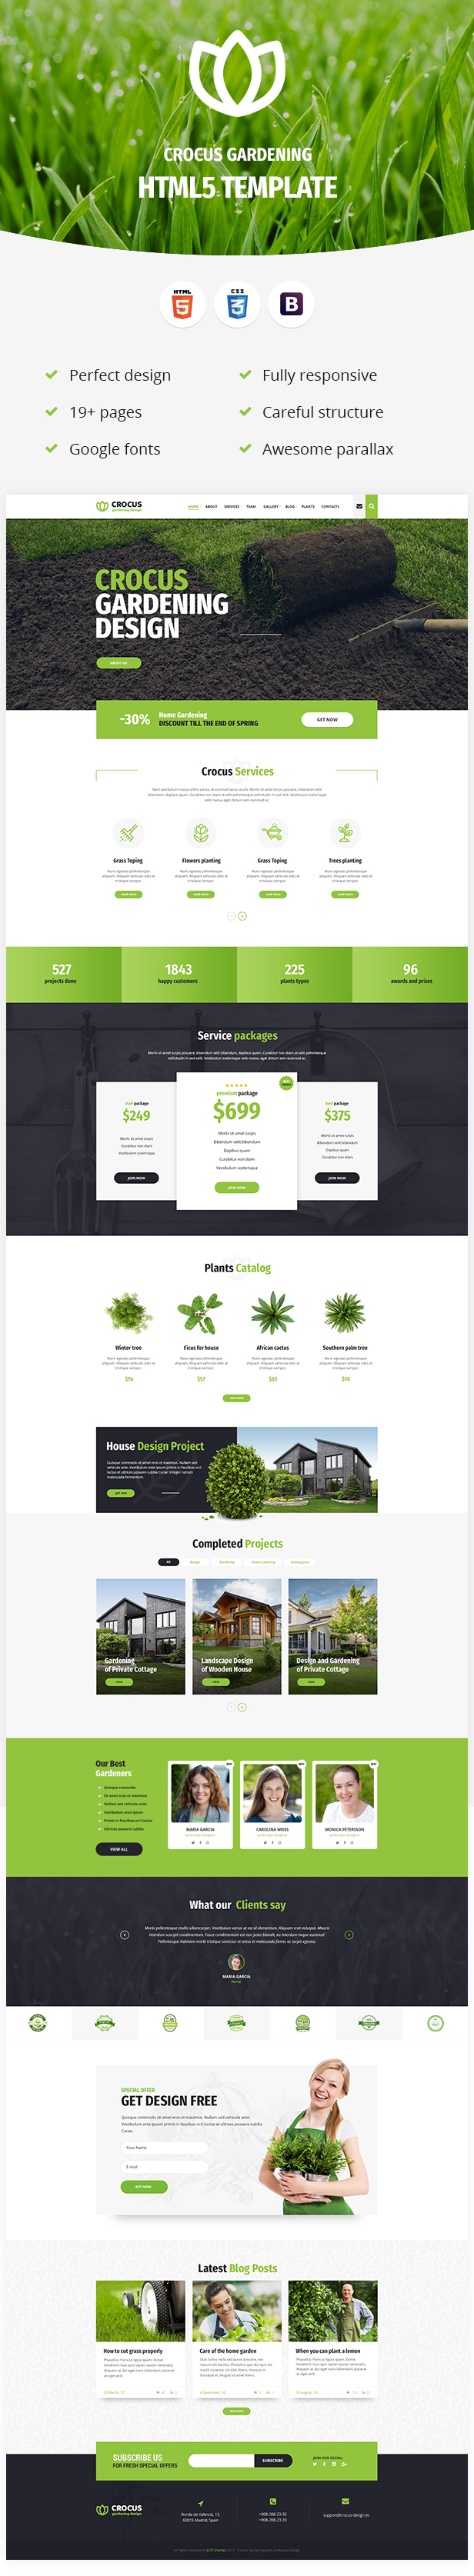 Garden and Landscape Design Company | Crocus Gardening  HTML Template - 1